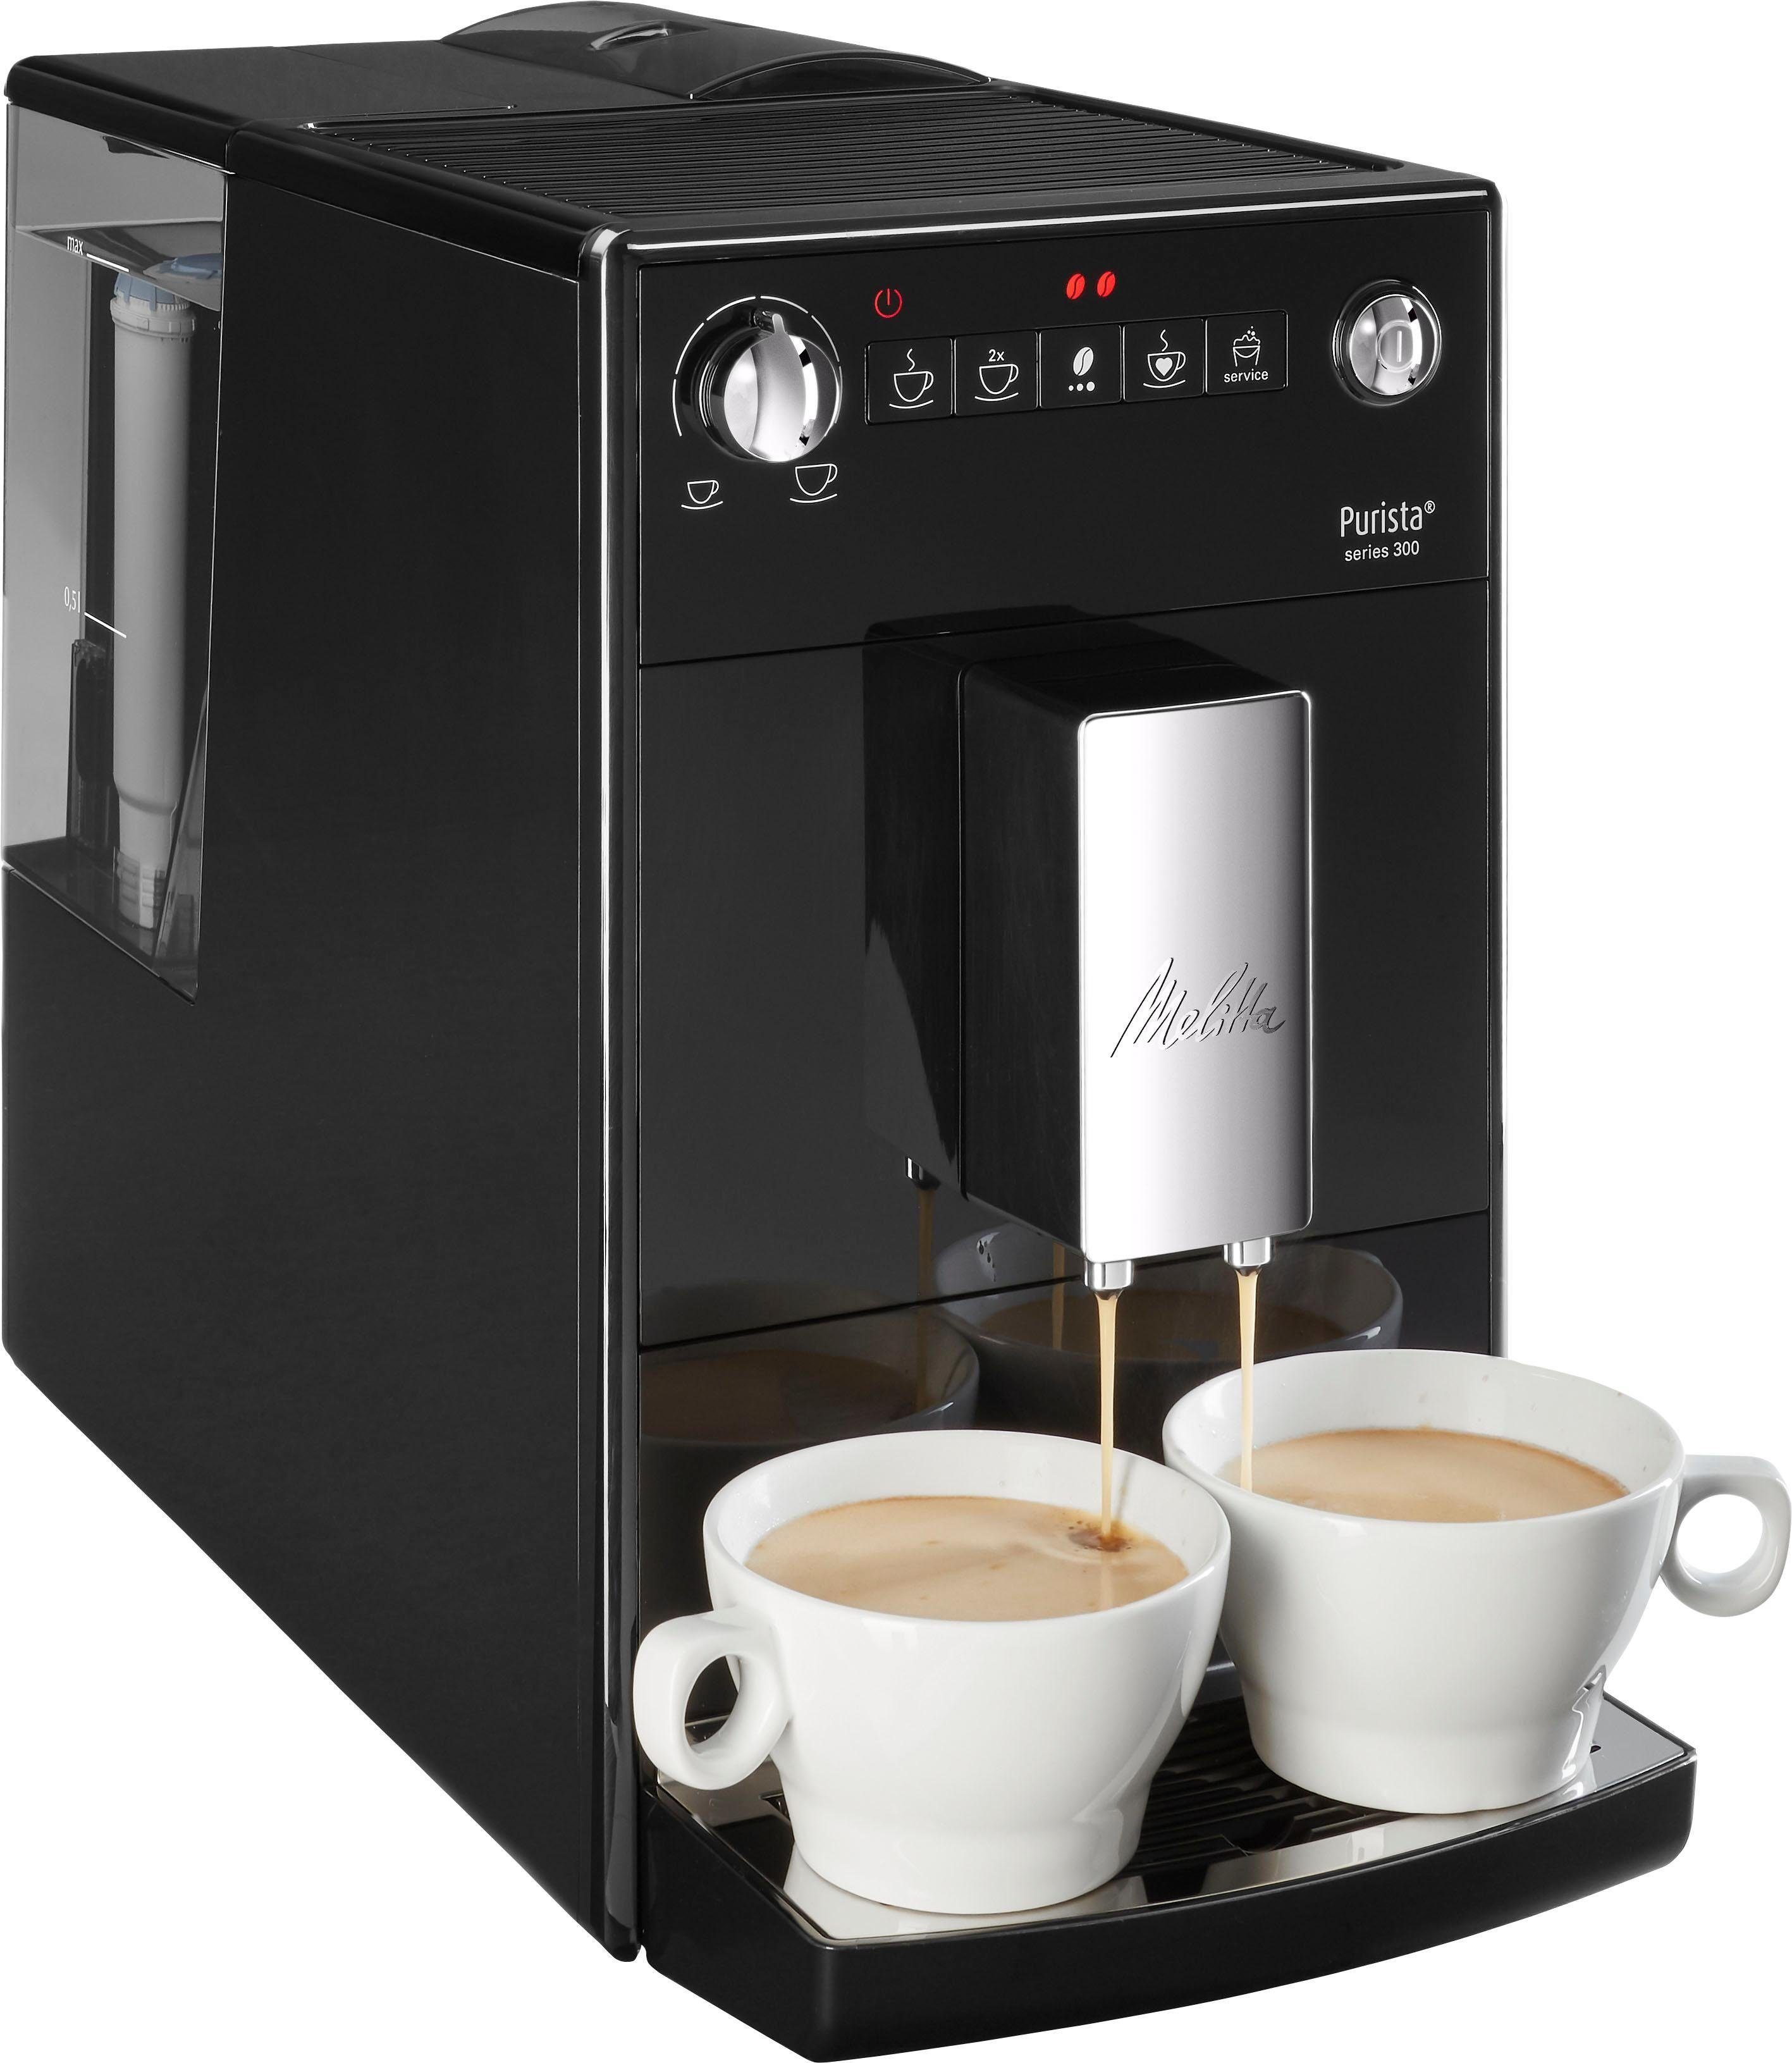 & Kaffeevollautomat Purista® leise F230-102, kompakt extra Lieblingskaffee-Funktion, schwarz, Melitta